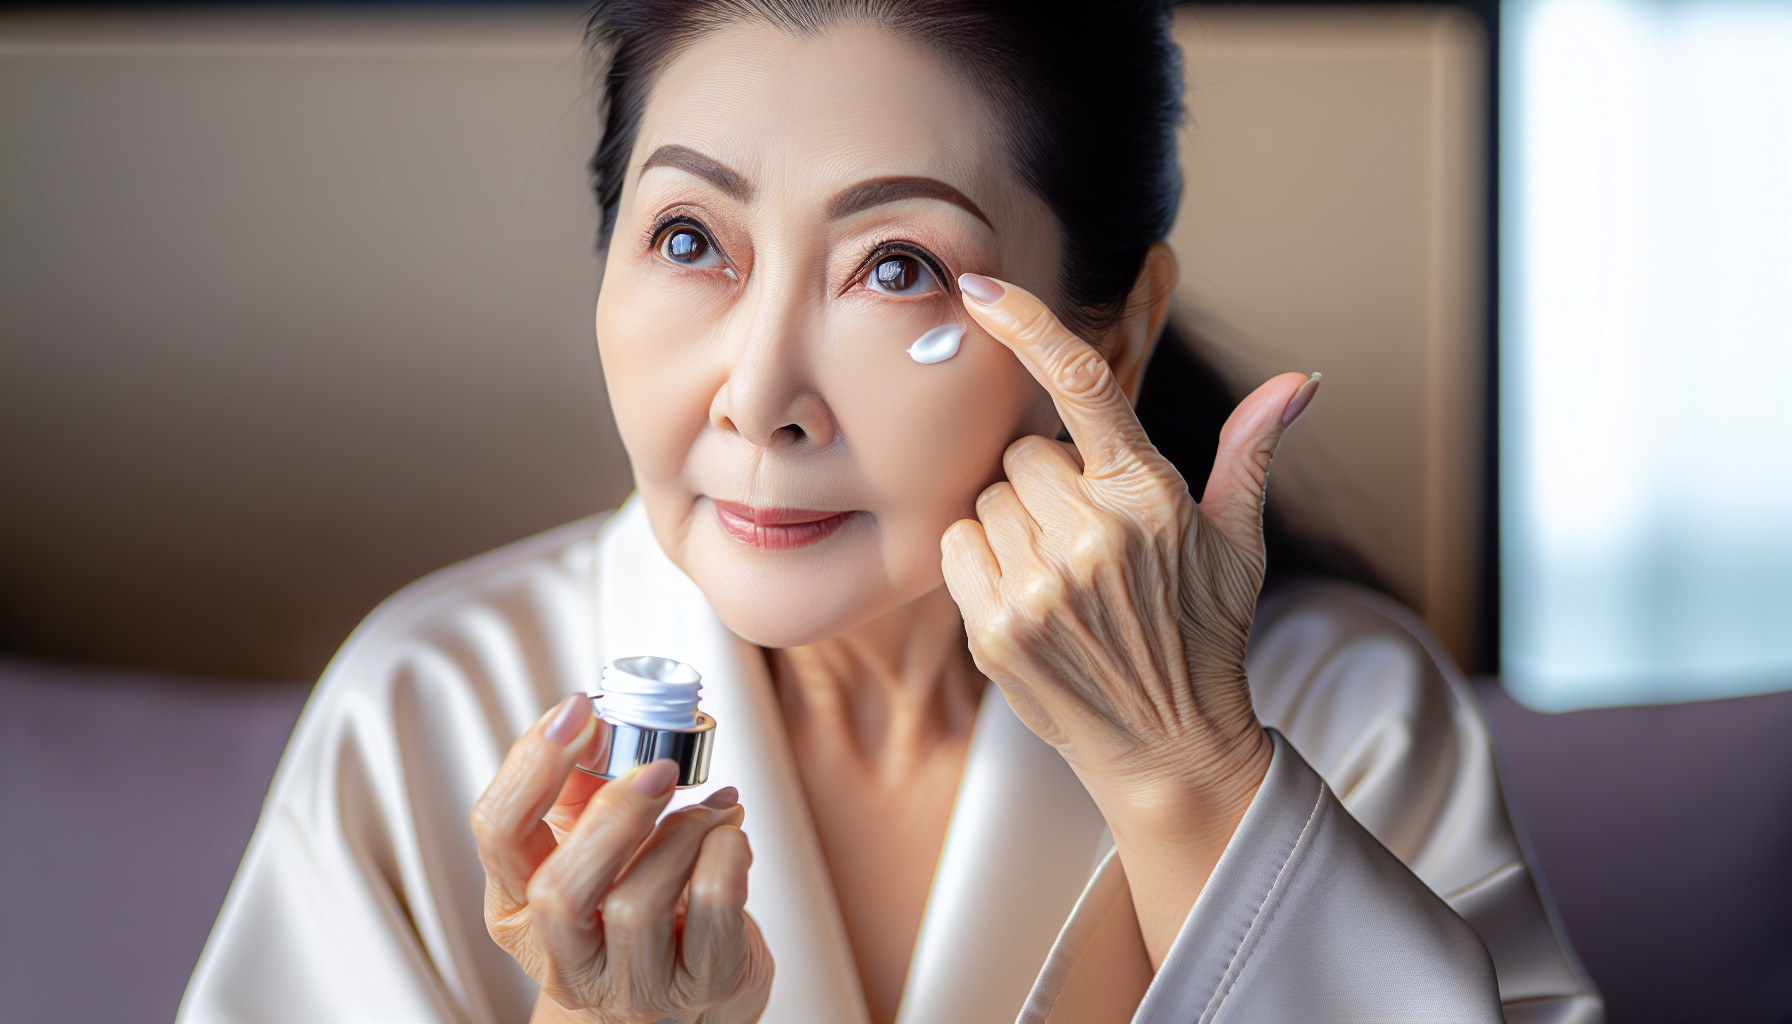 Woman applying eye cream